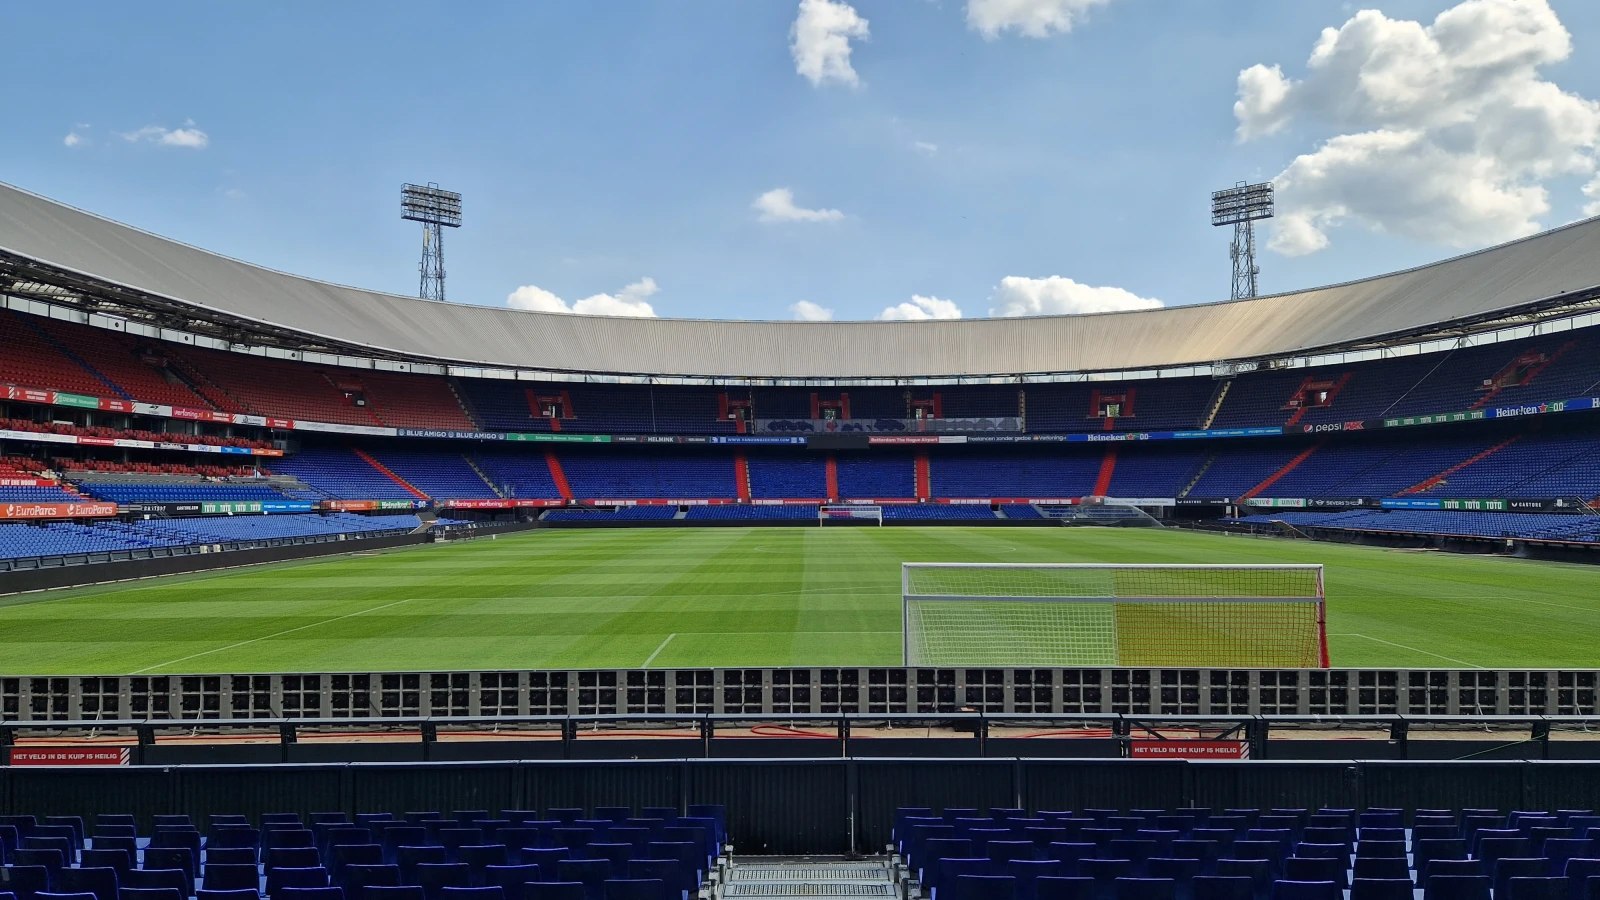 FR-Fans.nl zoekt versterking, ben jij die Feyenoorder die we zoeken?